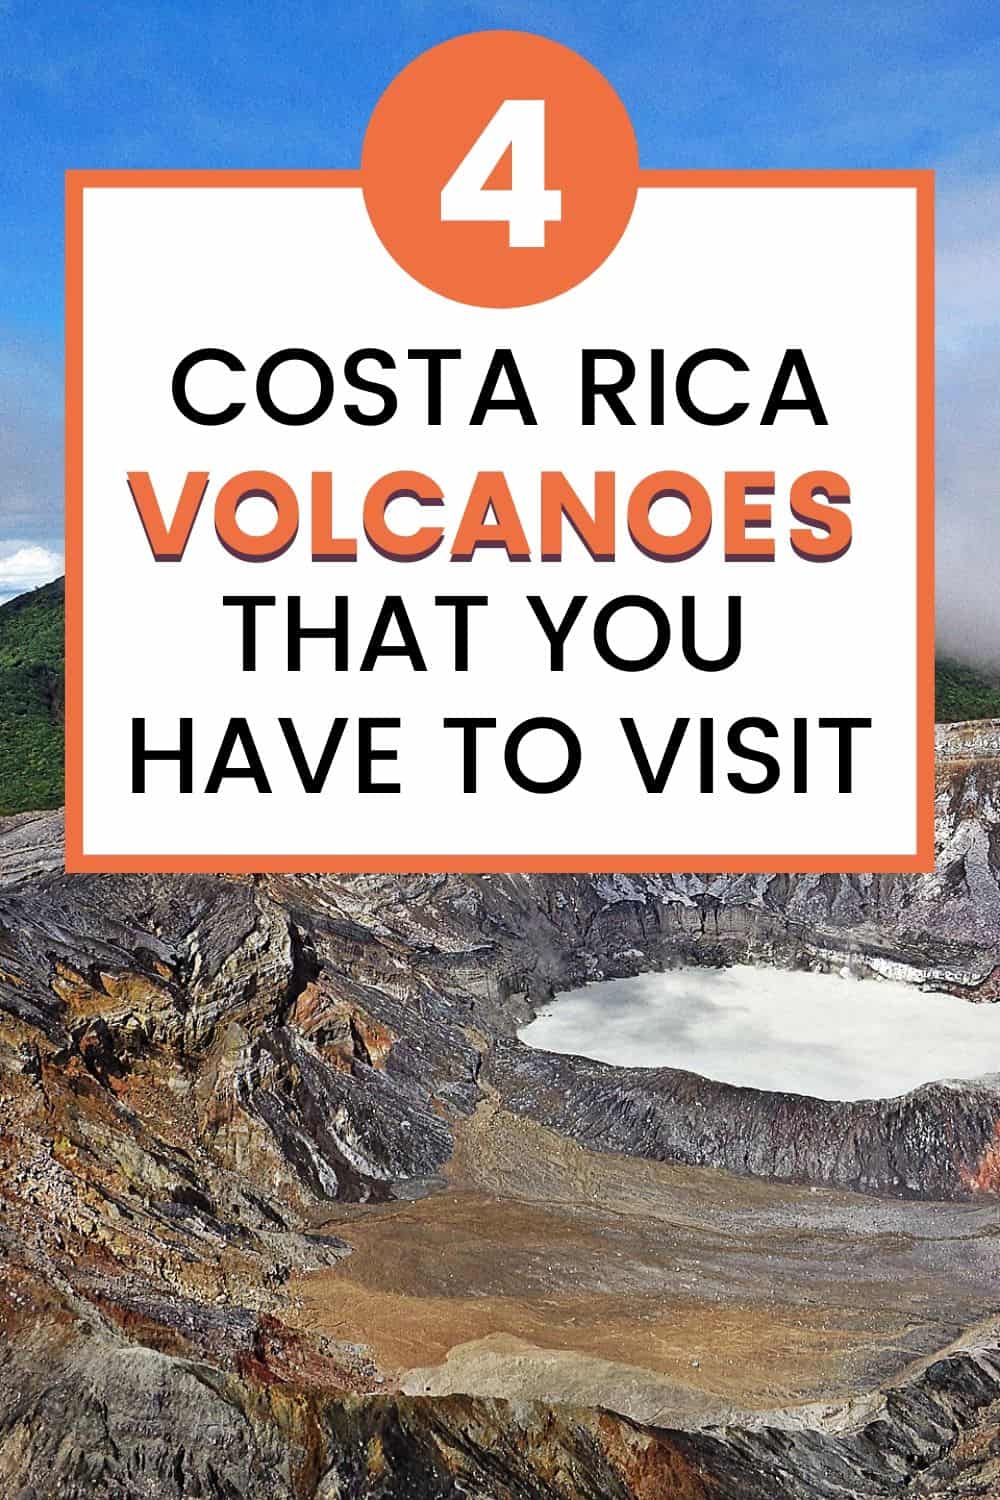 Les Volcans Du Costa Rica Que Tu Dois Visiter 88